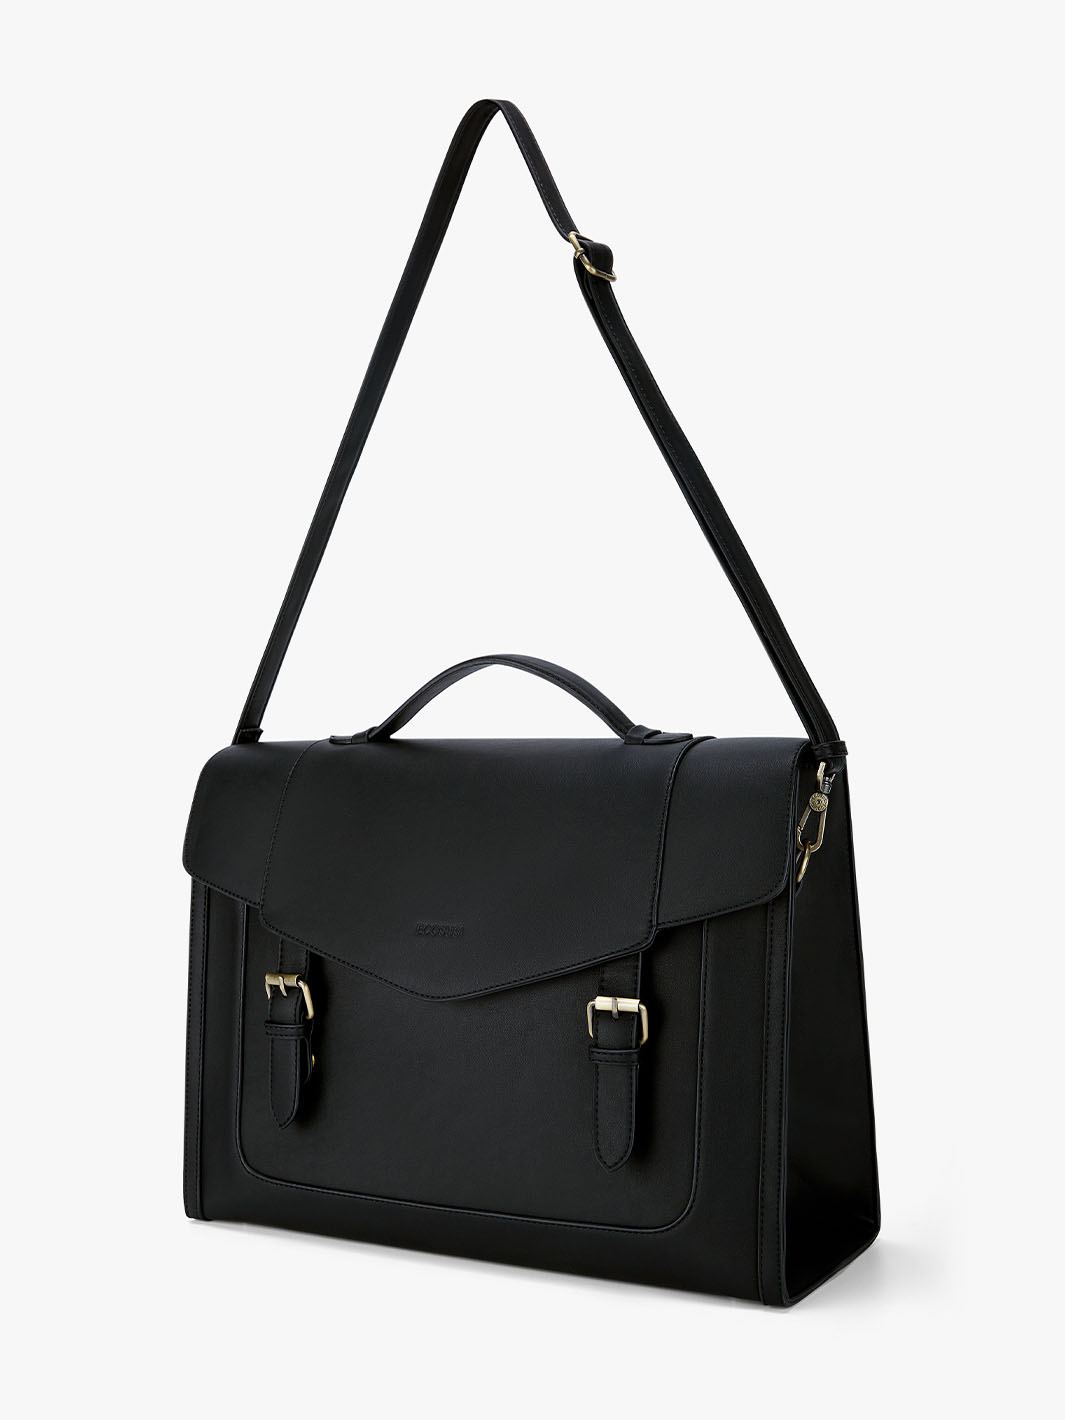 Classic Vegan Leather Shoulder Bag, Women Black Sparkling Handbags Bling  Chain Bag Medium Crossbody Bag